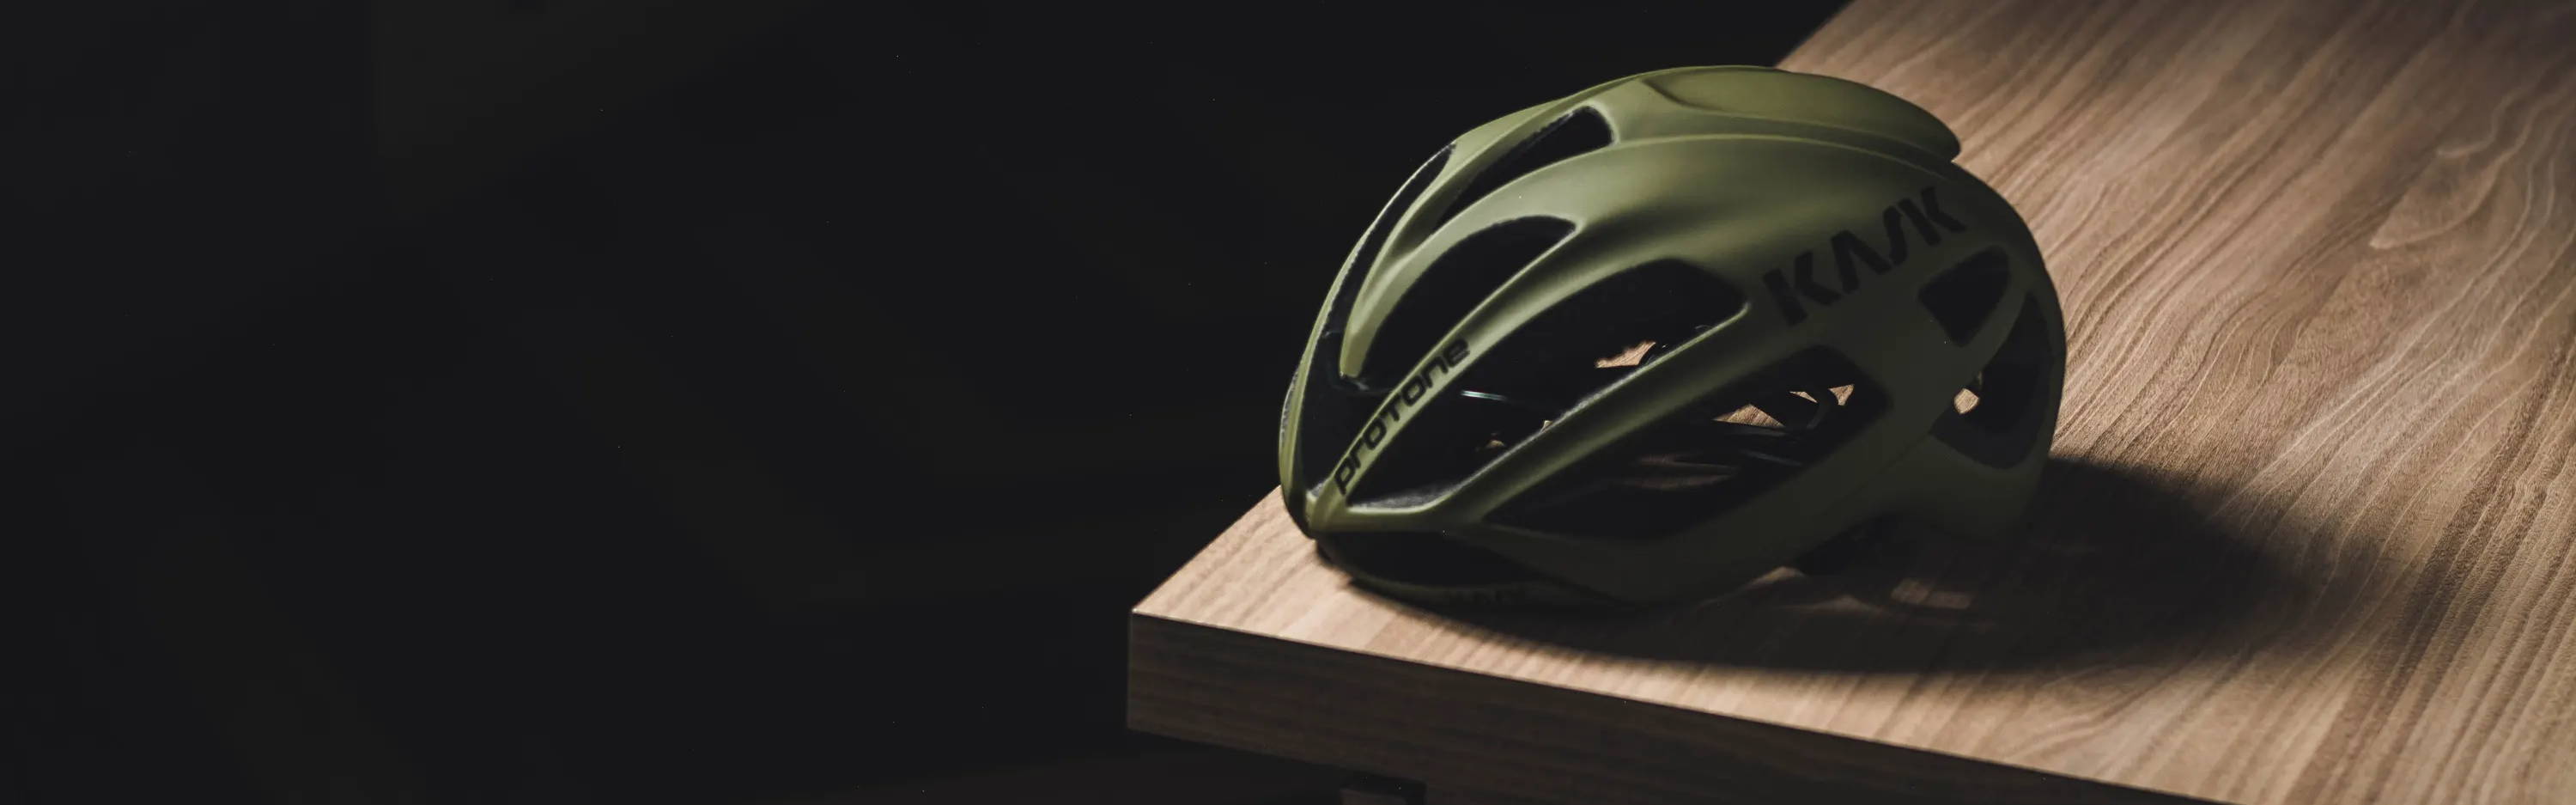 MATTE OLIVE GREEN KASK NEW Kask PROTONE Road Cycling Helmet 